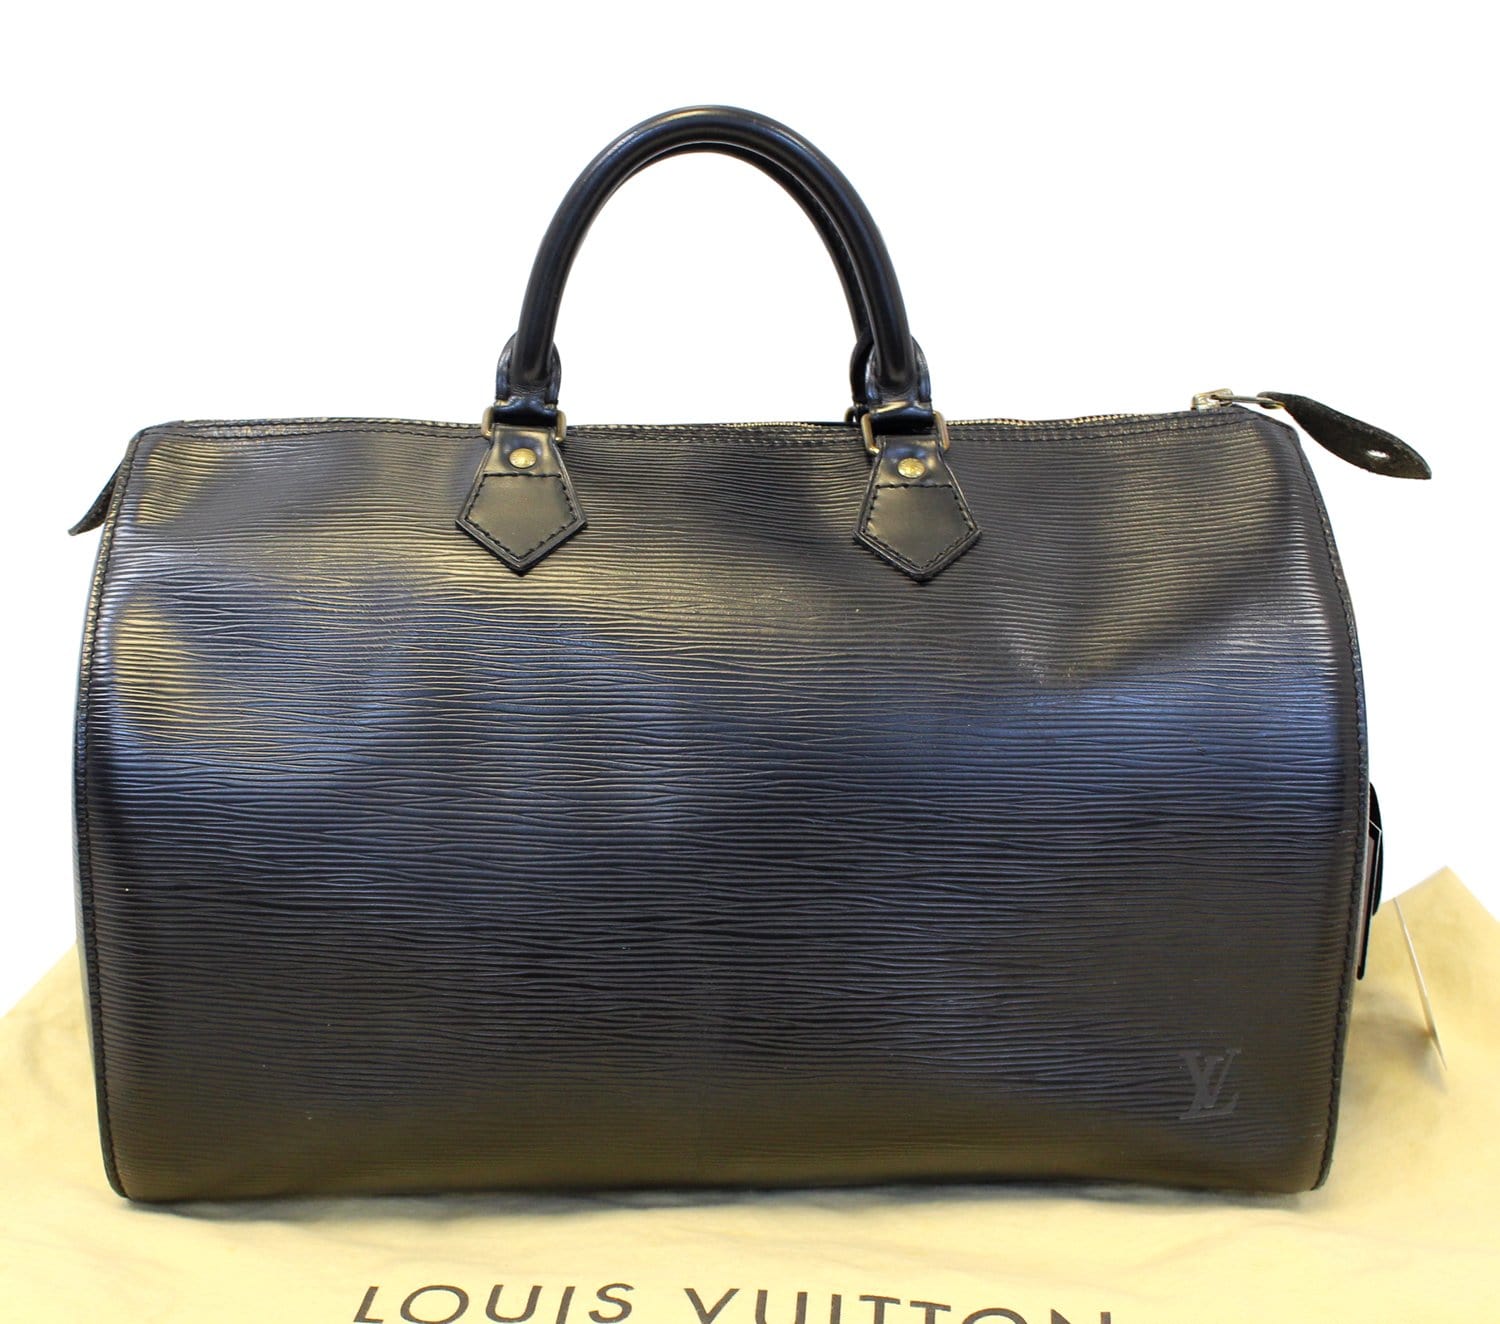 ❤REVIEW - Louis Vuitton Speedy 40 Epi black 